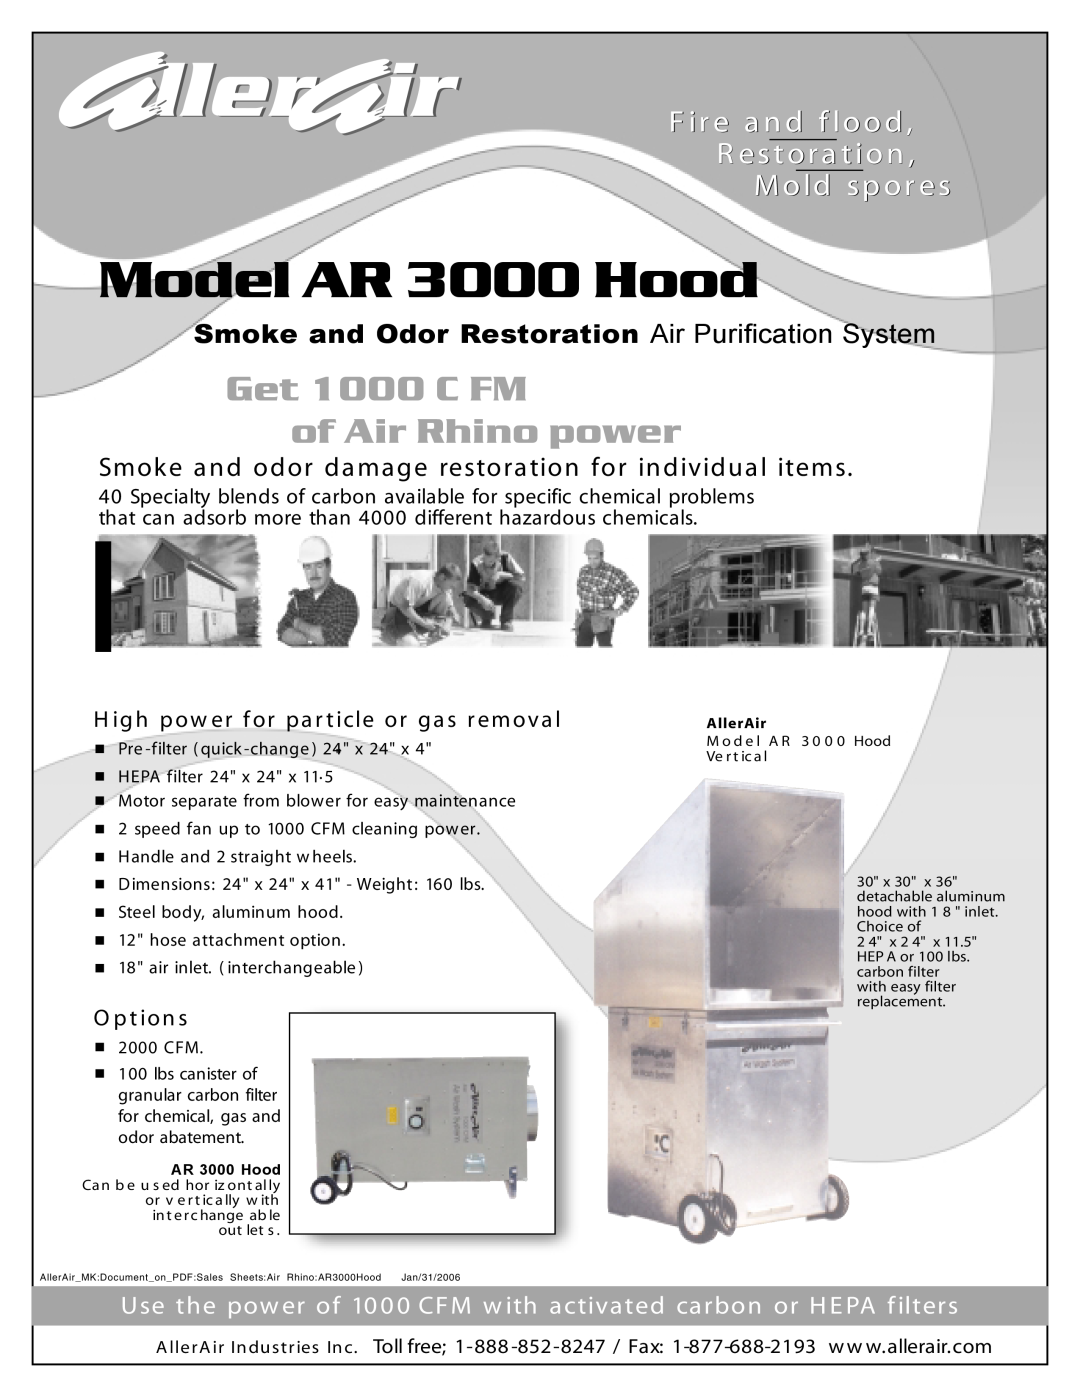 AllerAir AW 3000 Hood dimensions Model AR 3000 Hood, Get 1000 C FM of Air Rhino power, O p t ion s 